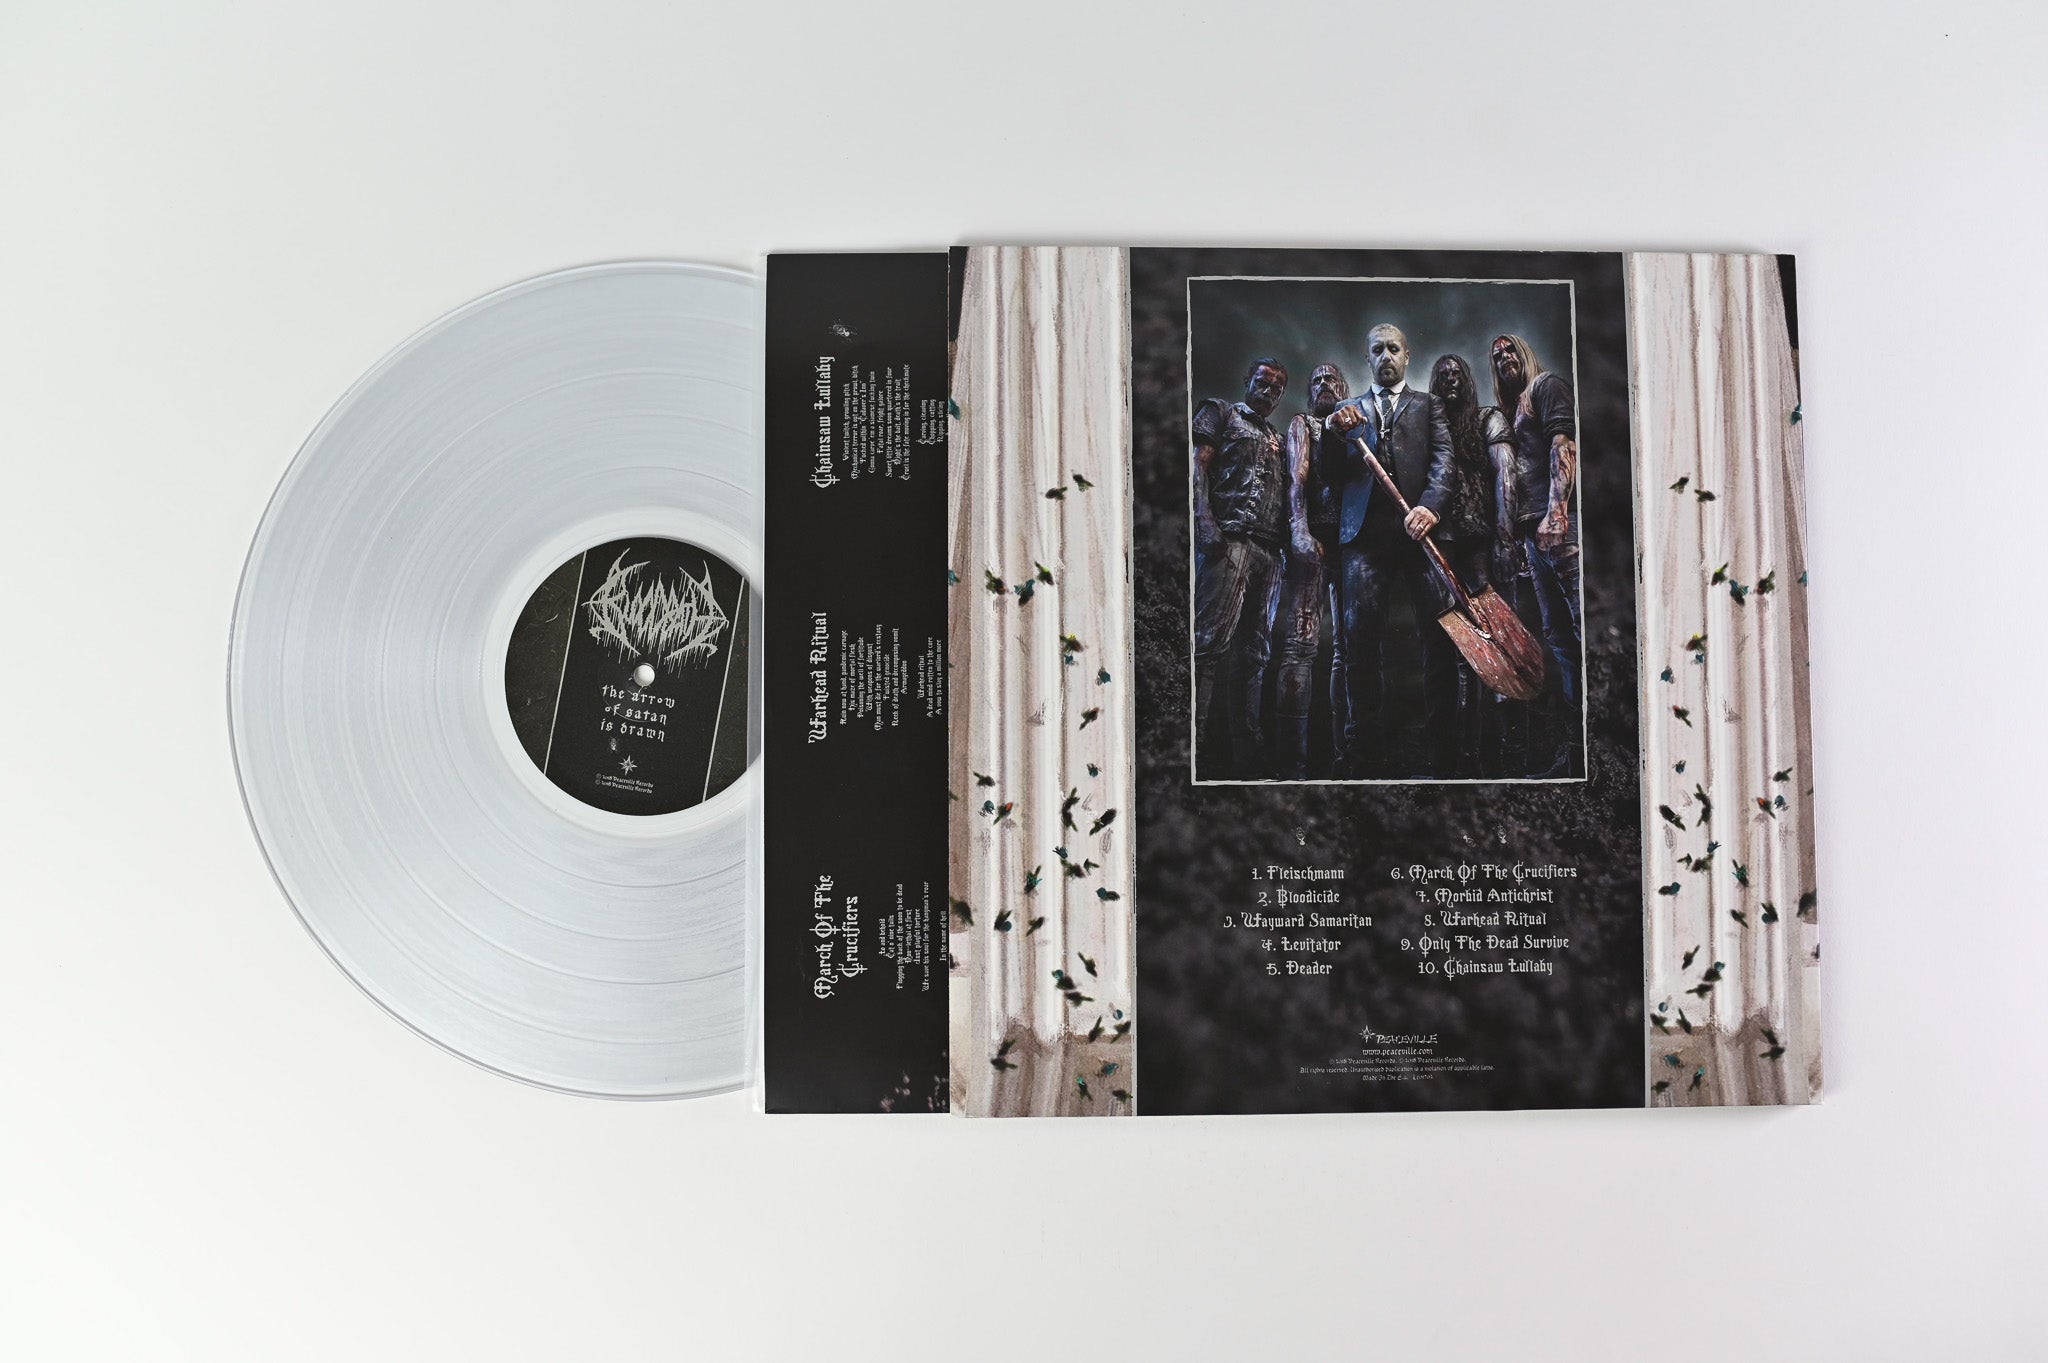 Bloodbath - The Arrow Of Satan Is Drawn on Peaceville Ltd Clear Vinyl